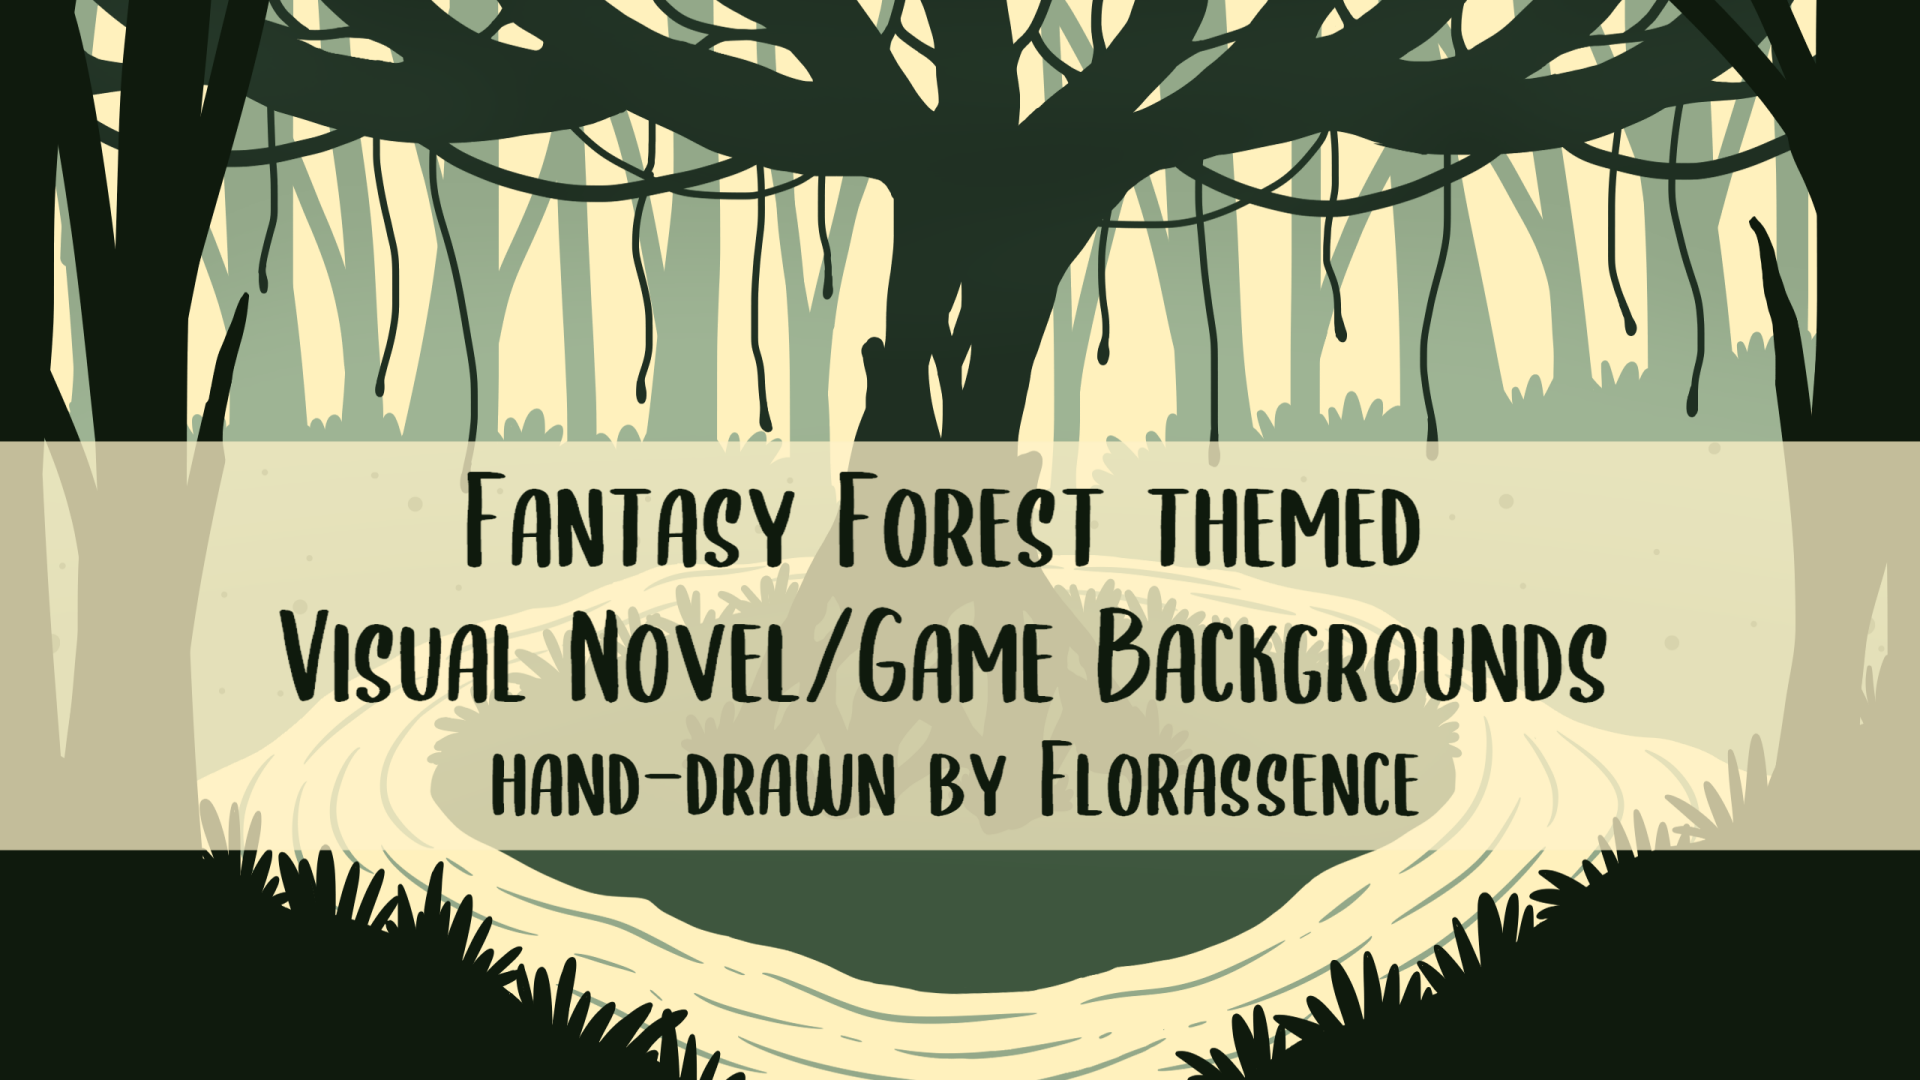 Fantasy Forest-themed Visual Novel/Game Backgrounds Pack